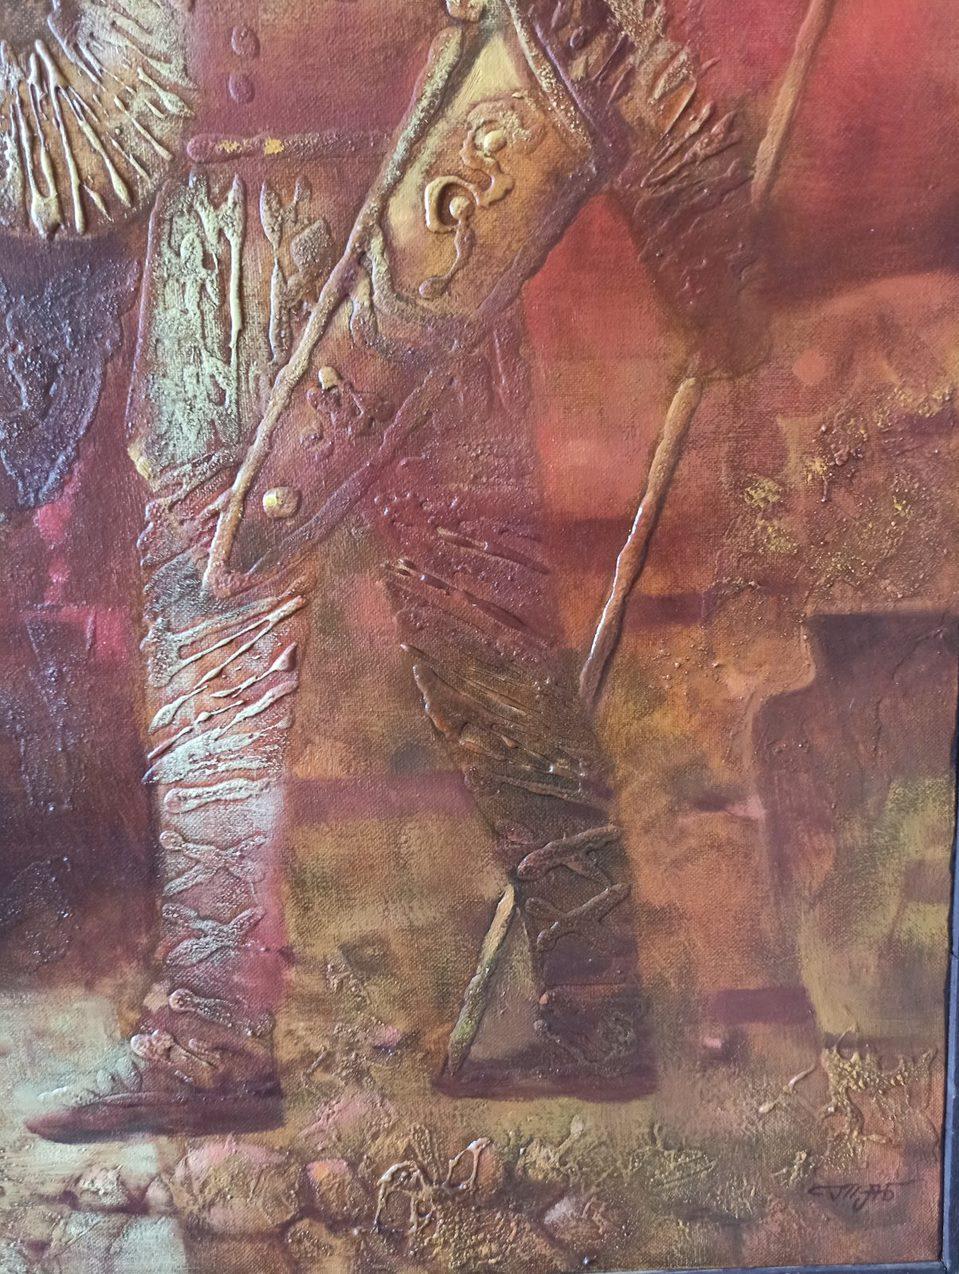 Artist: Anatoly Borisovich Tarabanov
Work: Original oil painting, handmade artwork, one of a kind 
Medium: Oil on Canvas 
Year: 2006
Style: Figurative art
Title: Scythian Legend
Size: 35.5